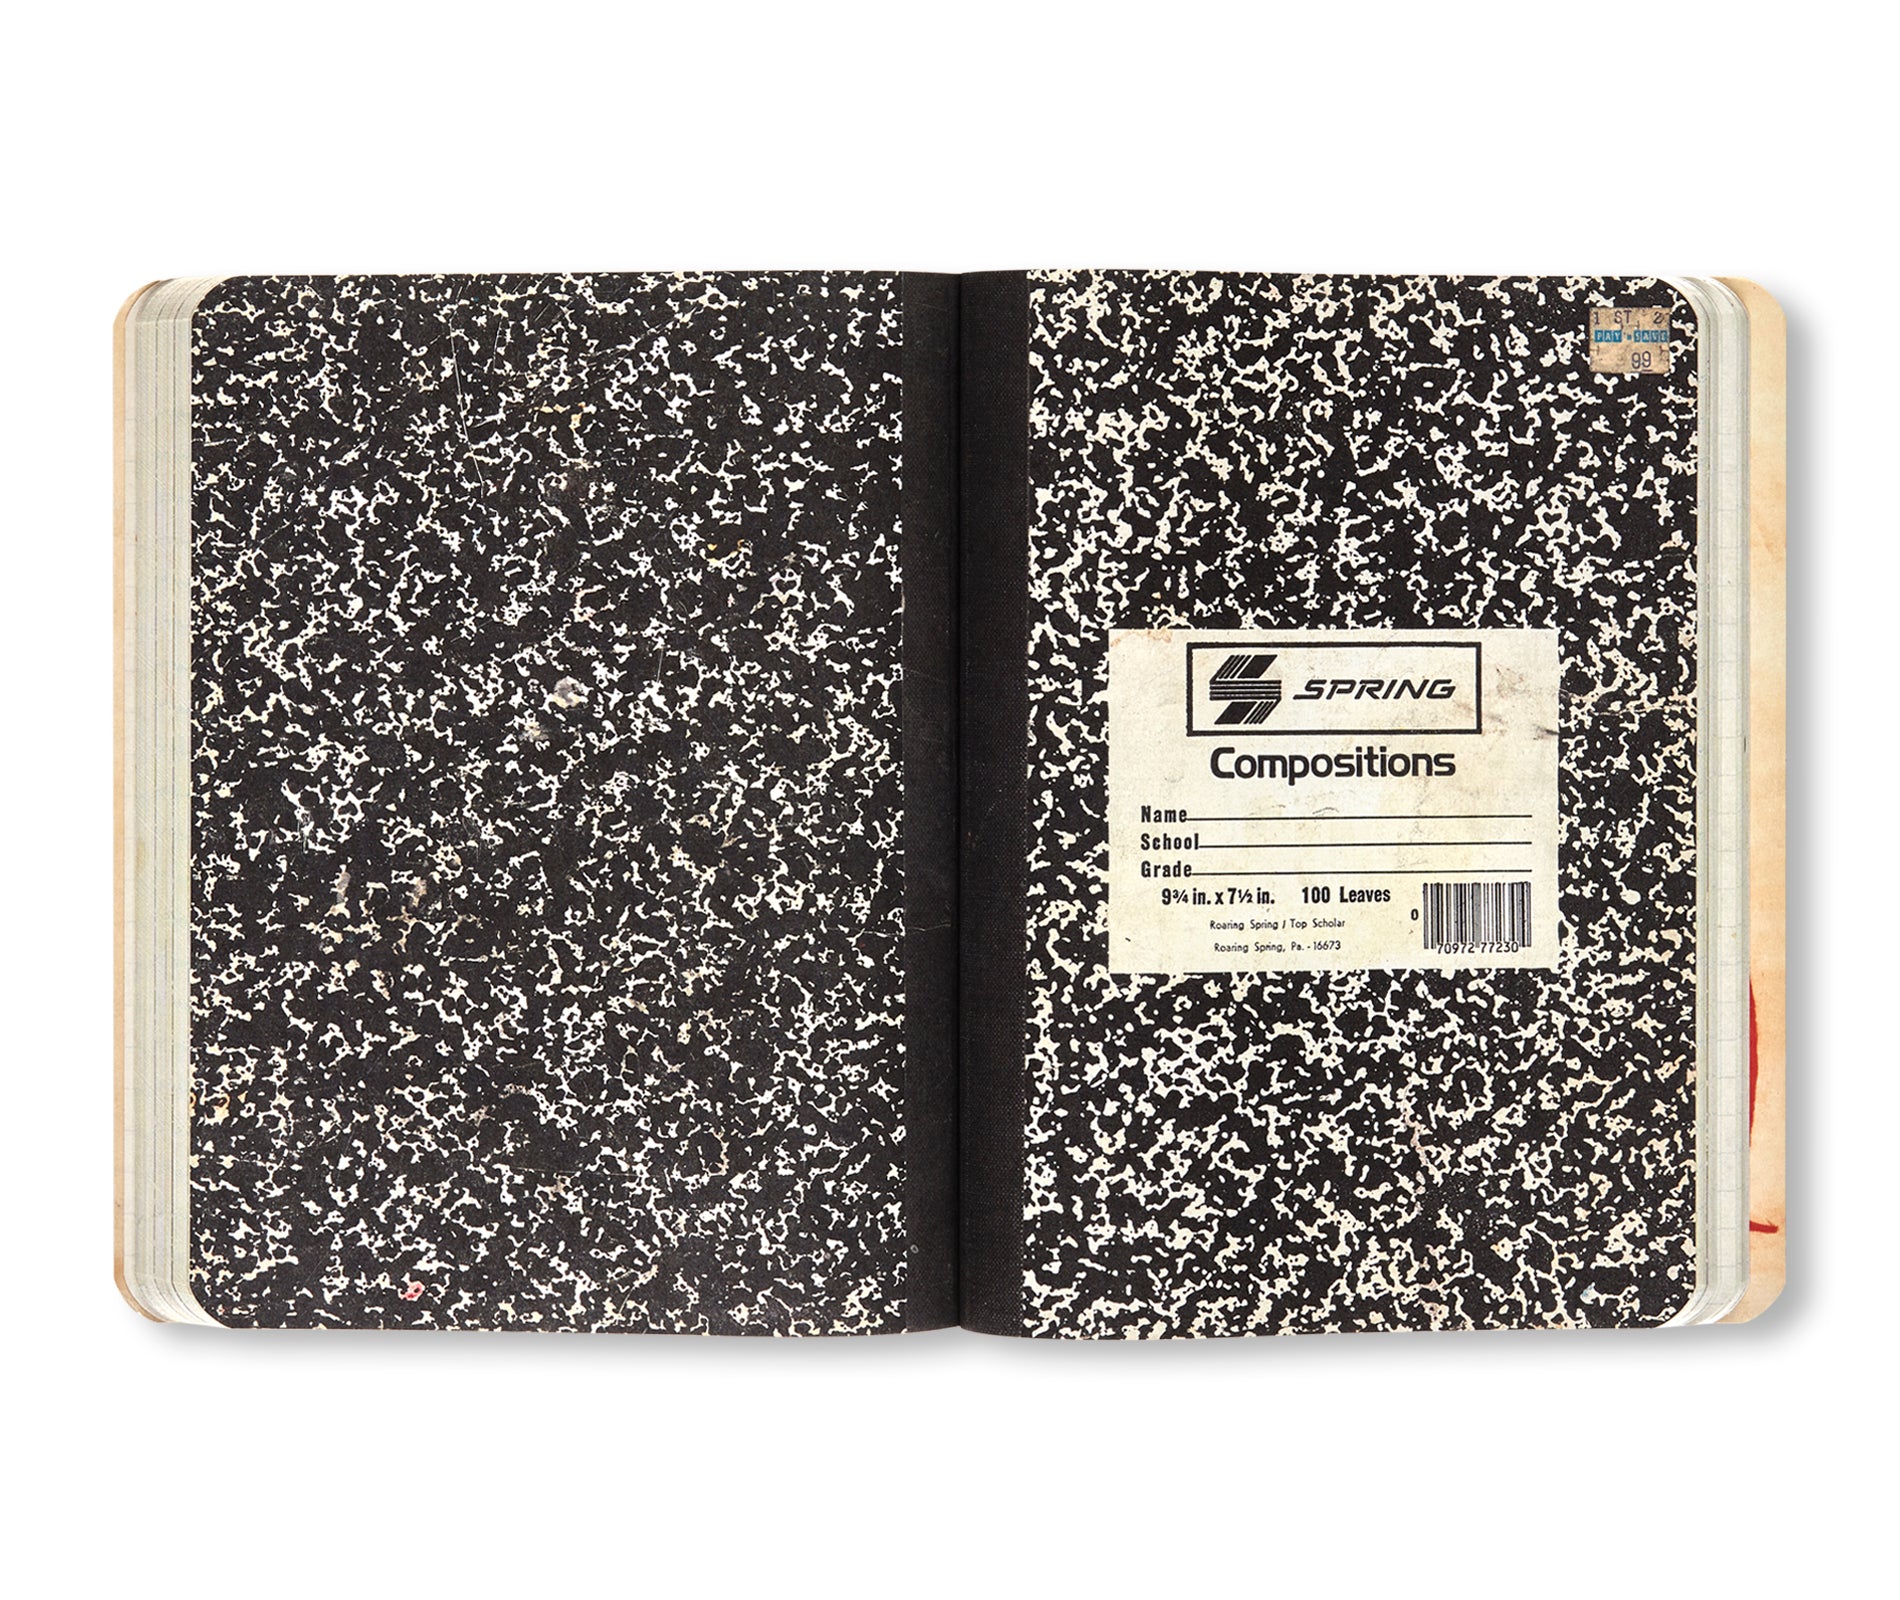 THE NOTEBOOKS by Jean-Michel Basquiat – twelvebooks